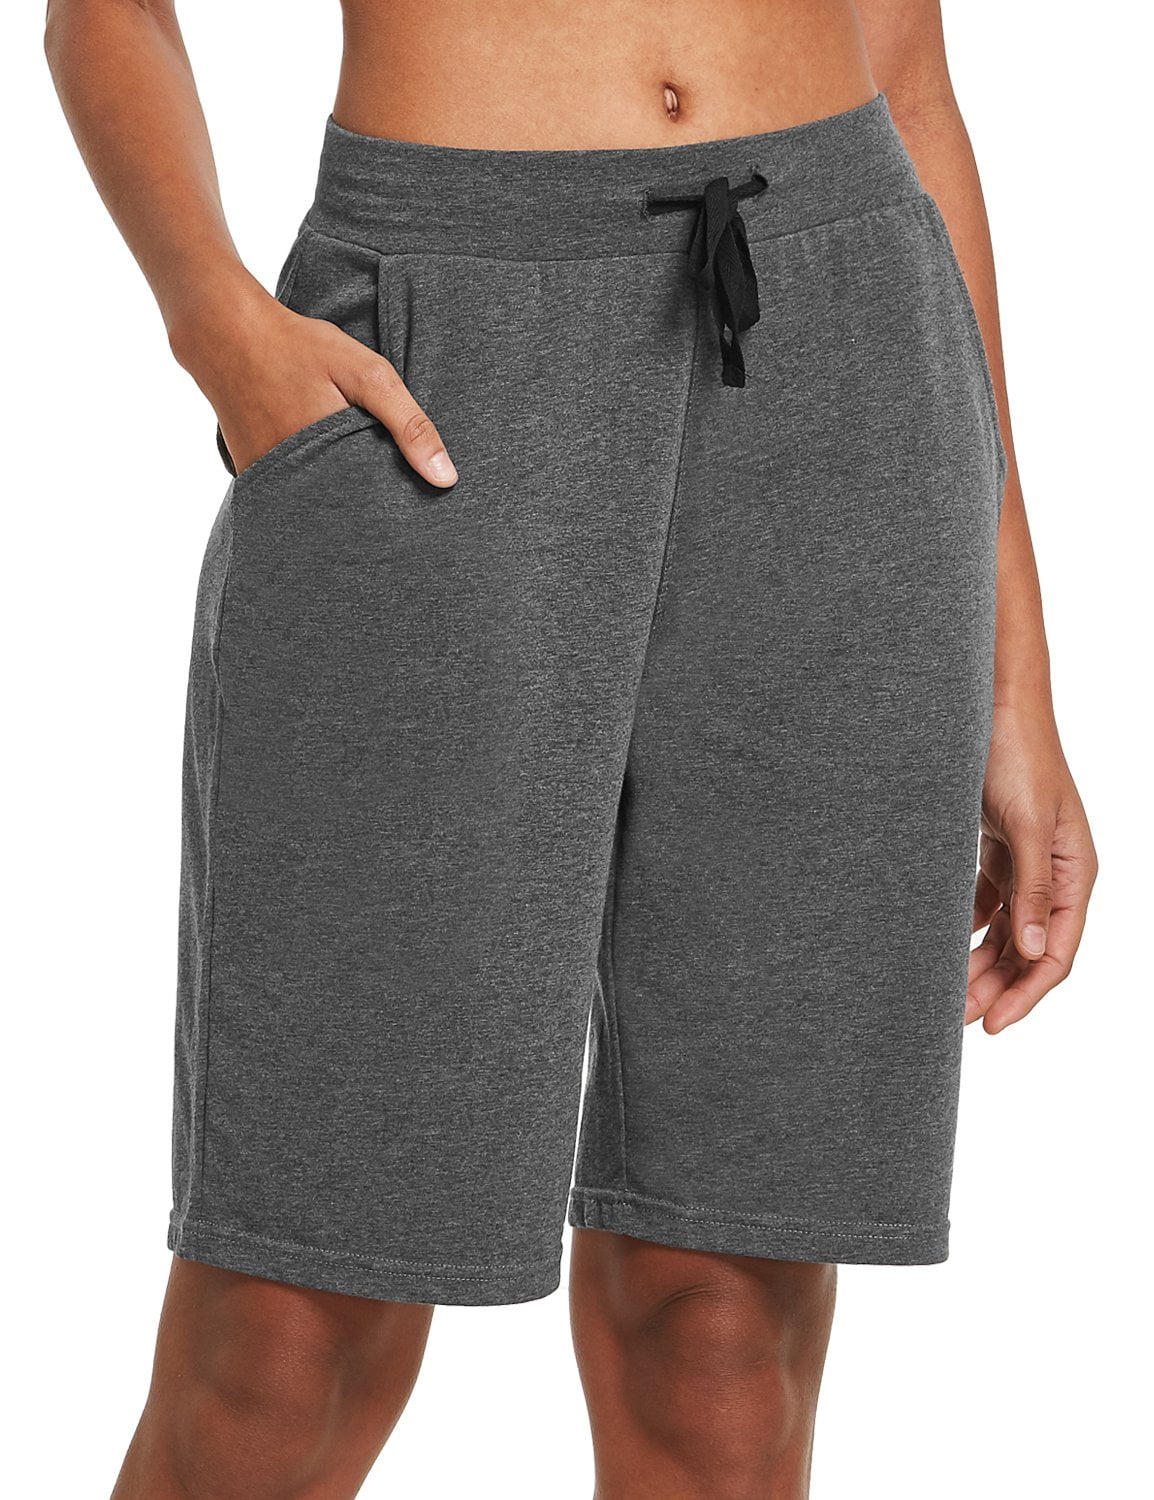 BALEAF Women's Bermuda Shorts Cotton Long Shorts with Pockets Charcoal S 